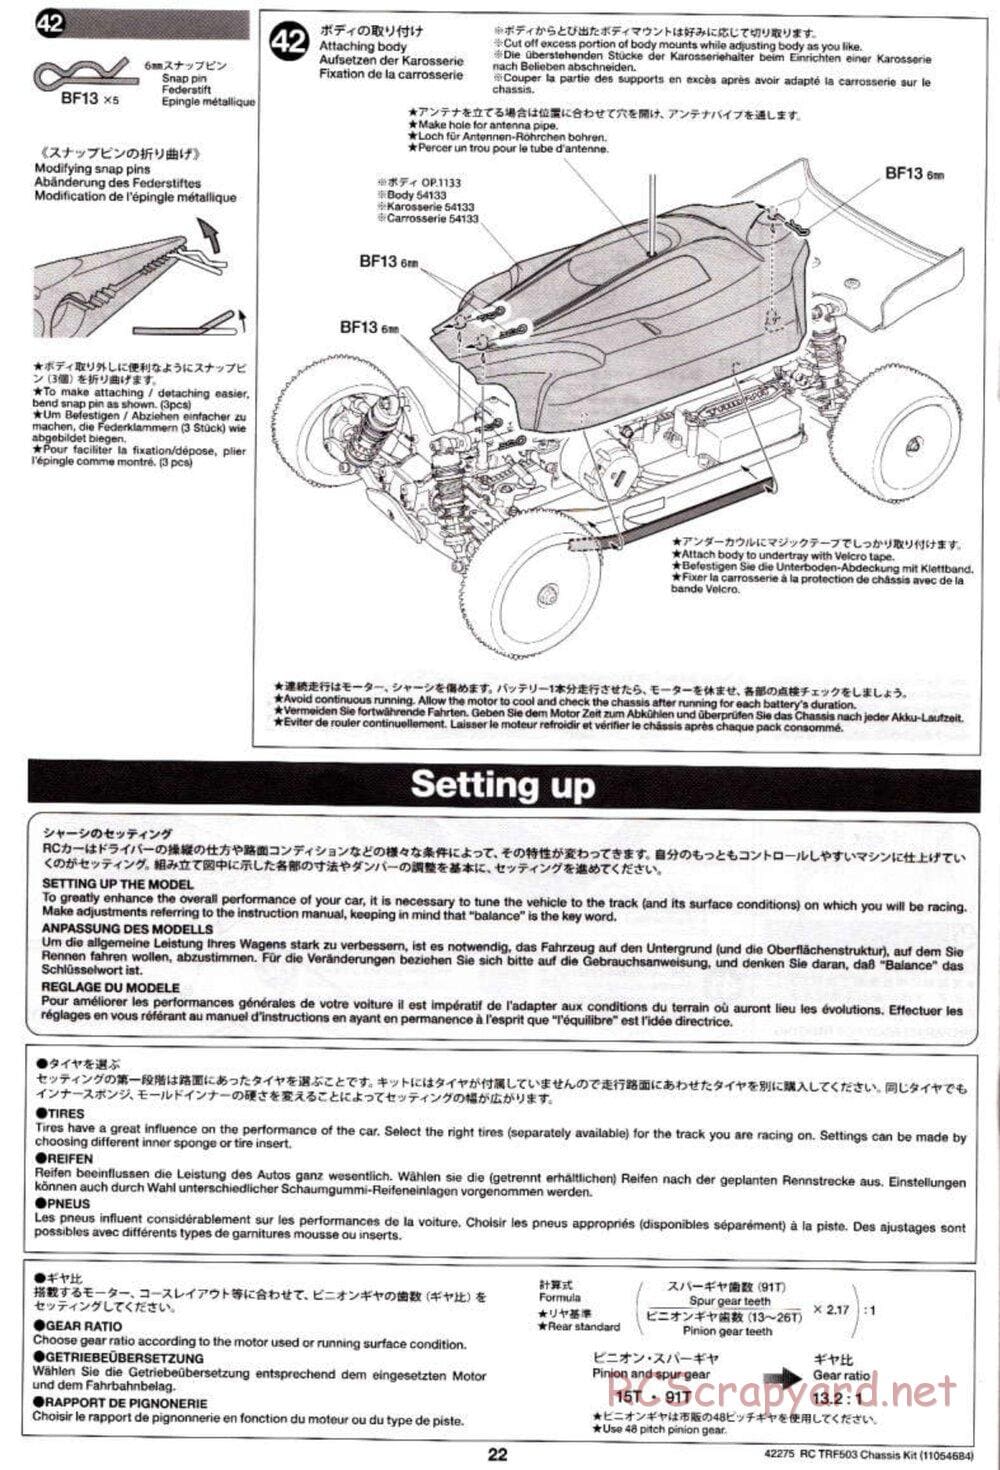 Tamiya - TRF503 Chassis - Manual - Page 22